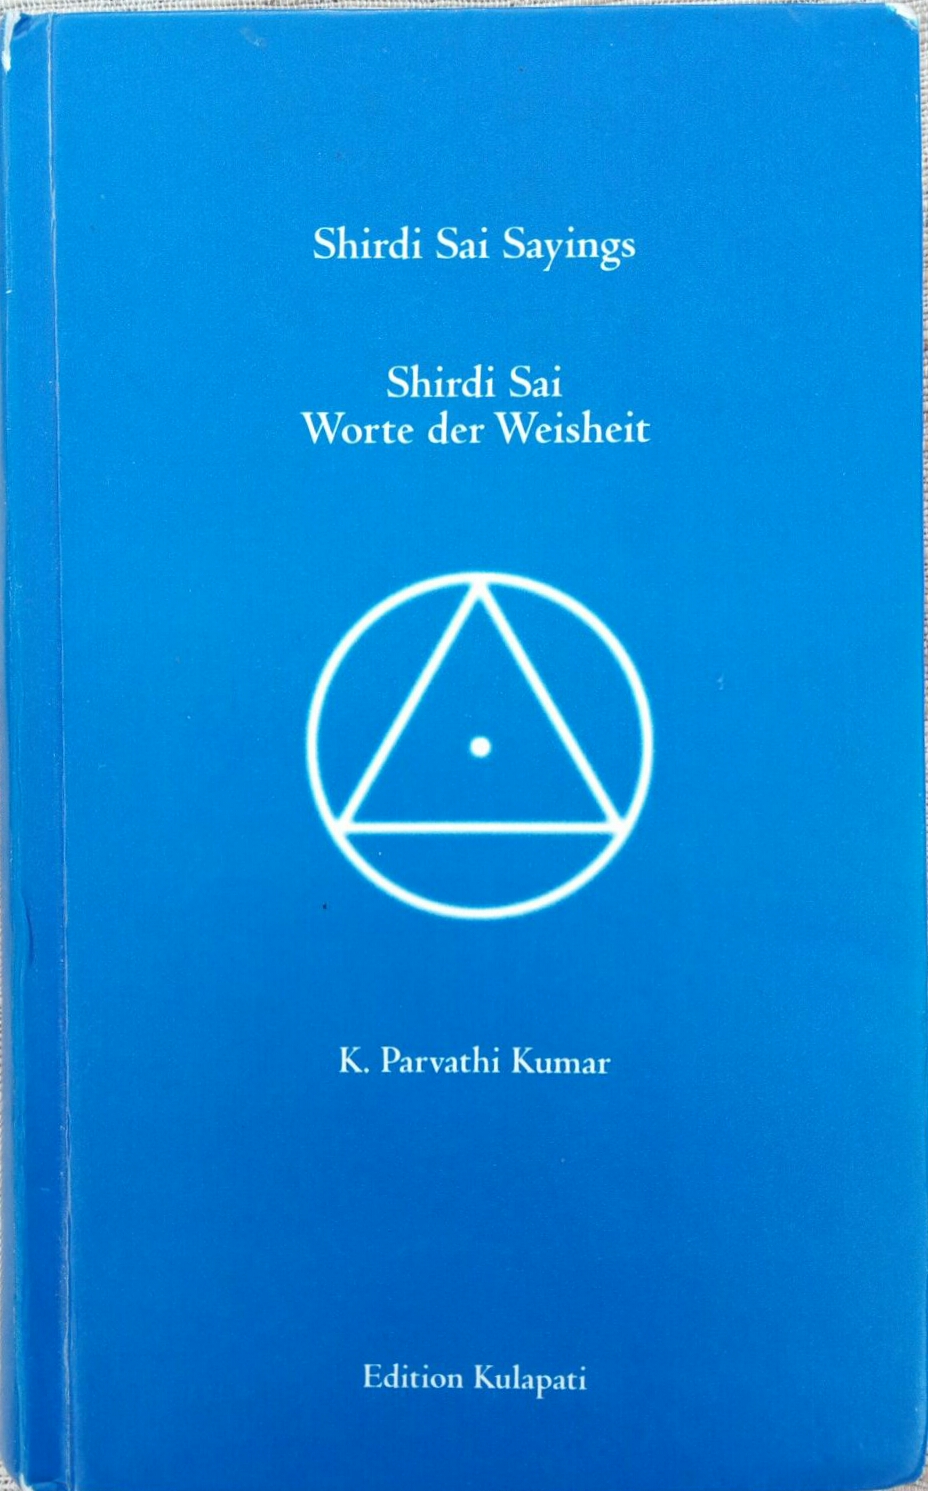 Shirdi Sai Baba Temple Frankfurt Germany (Deutschland) recommended book - Shirdi Sai Saying, Shirdi Sai Worte der Weisheit .